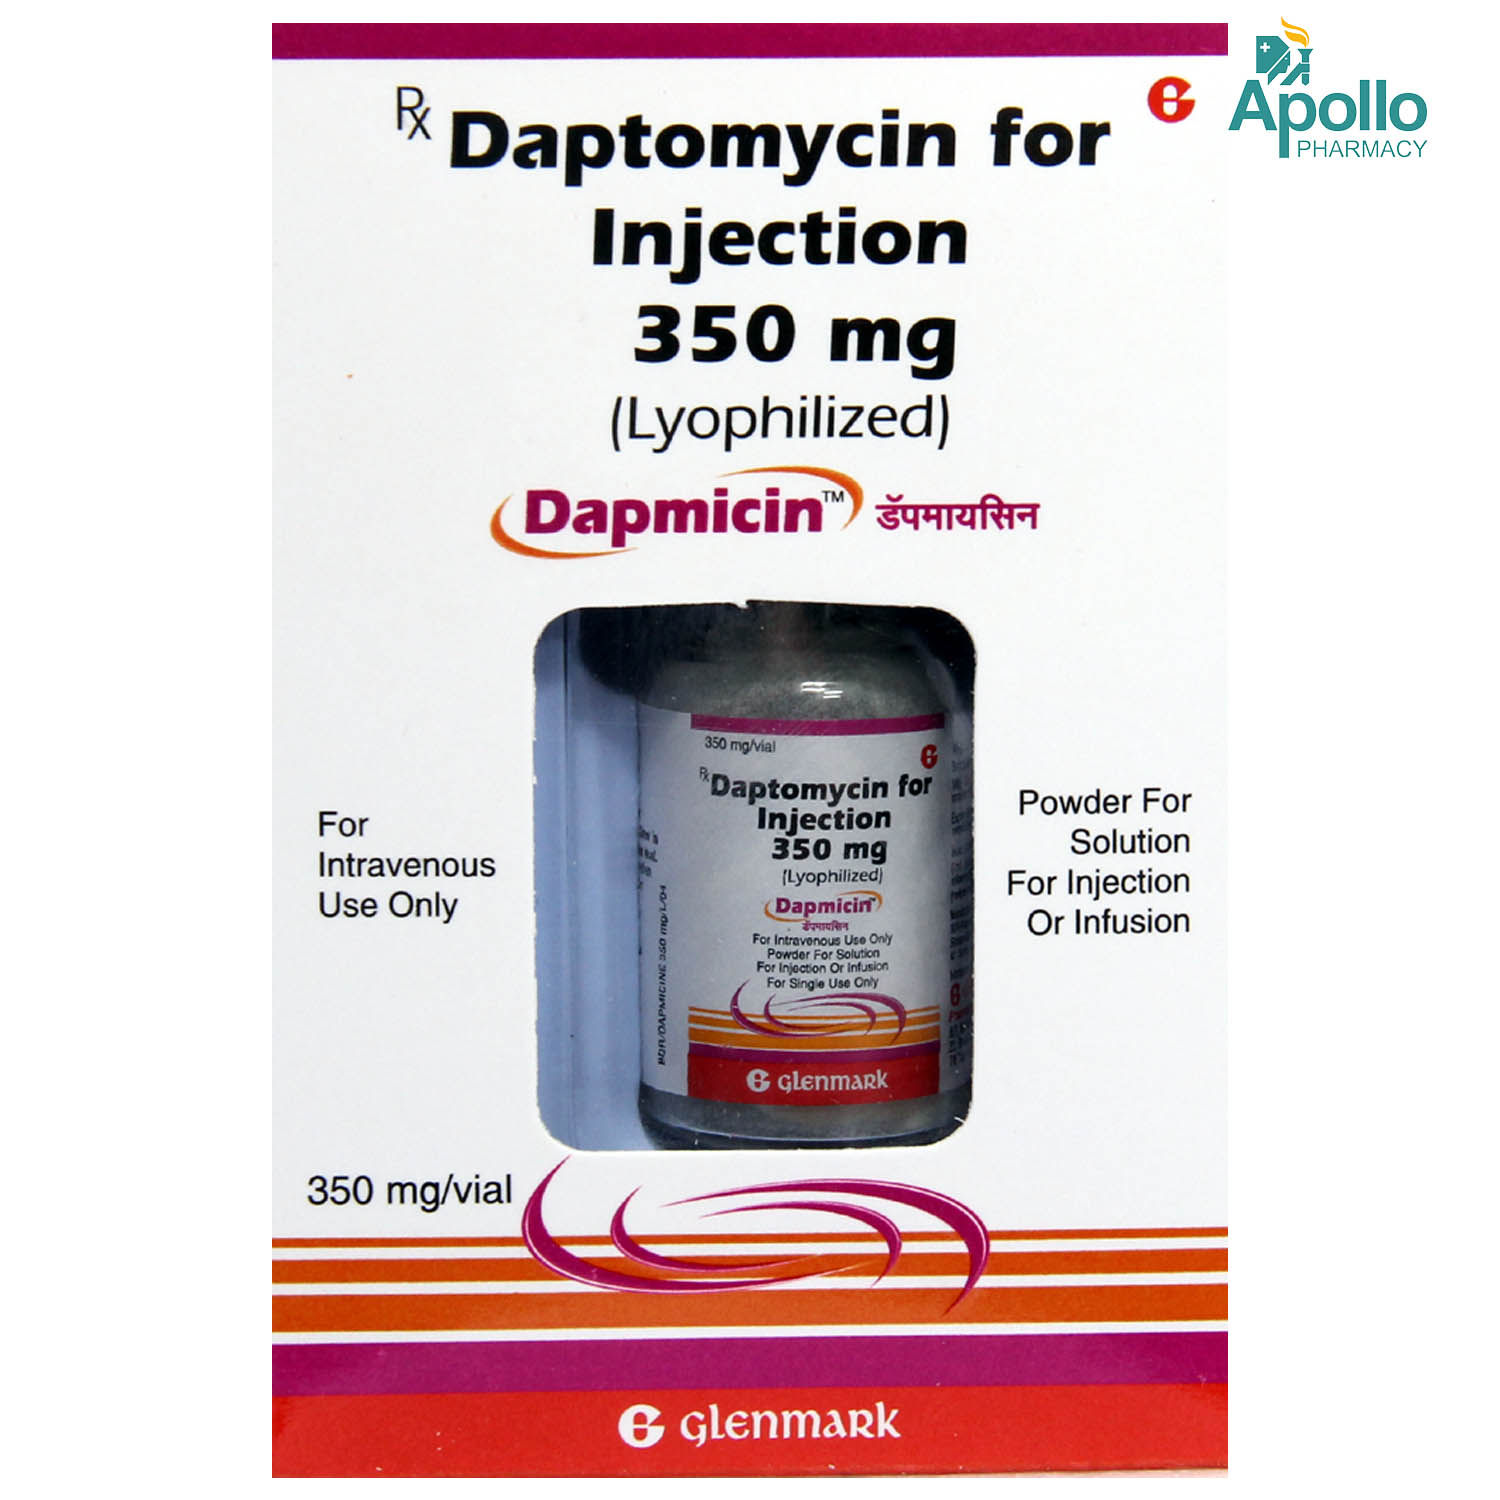 Buy Dapmicin 350mg Injection Online